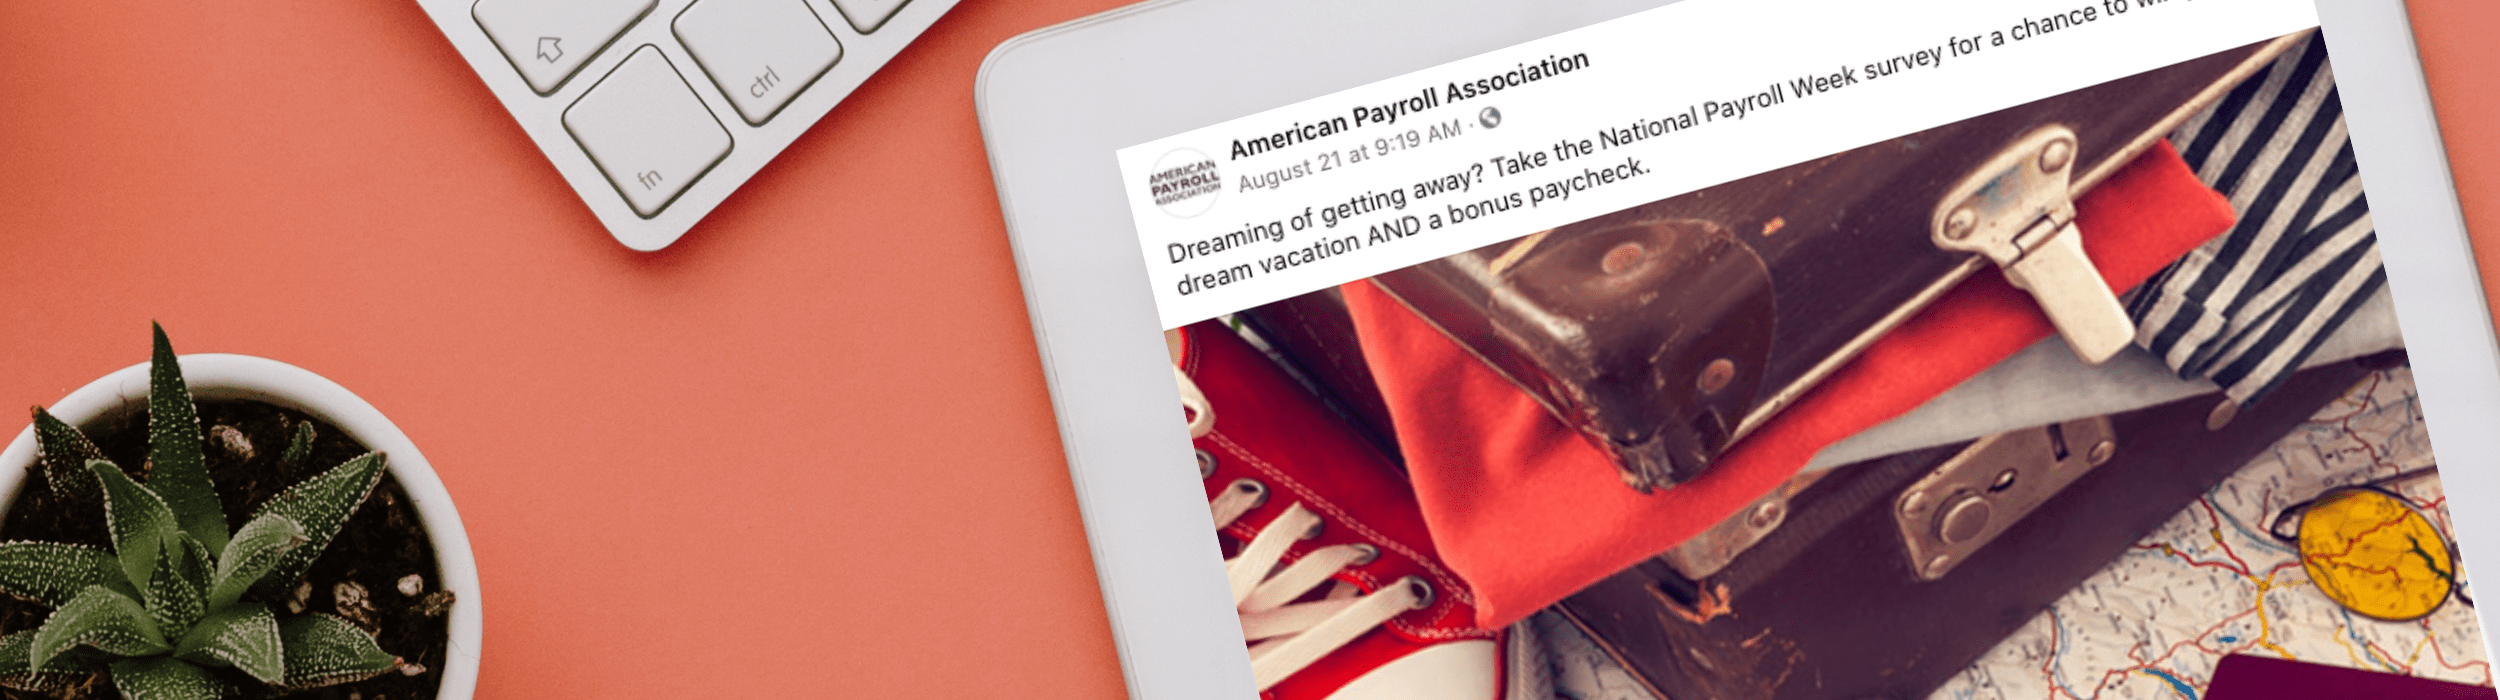 American Payroll Association ad on tablet